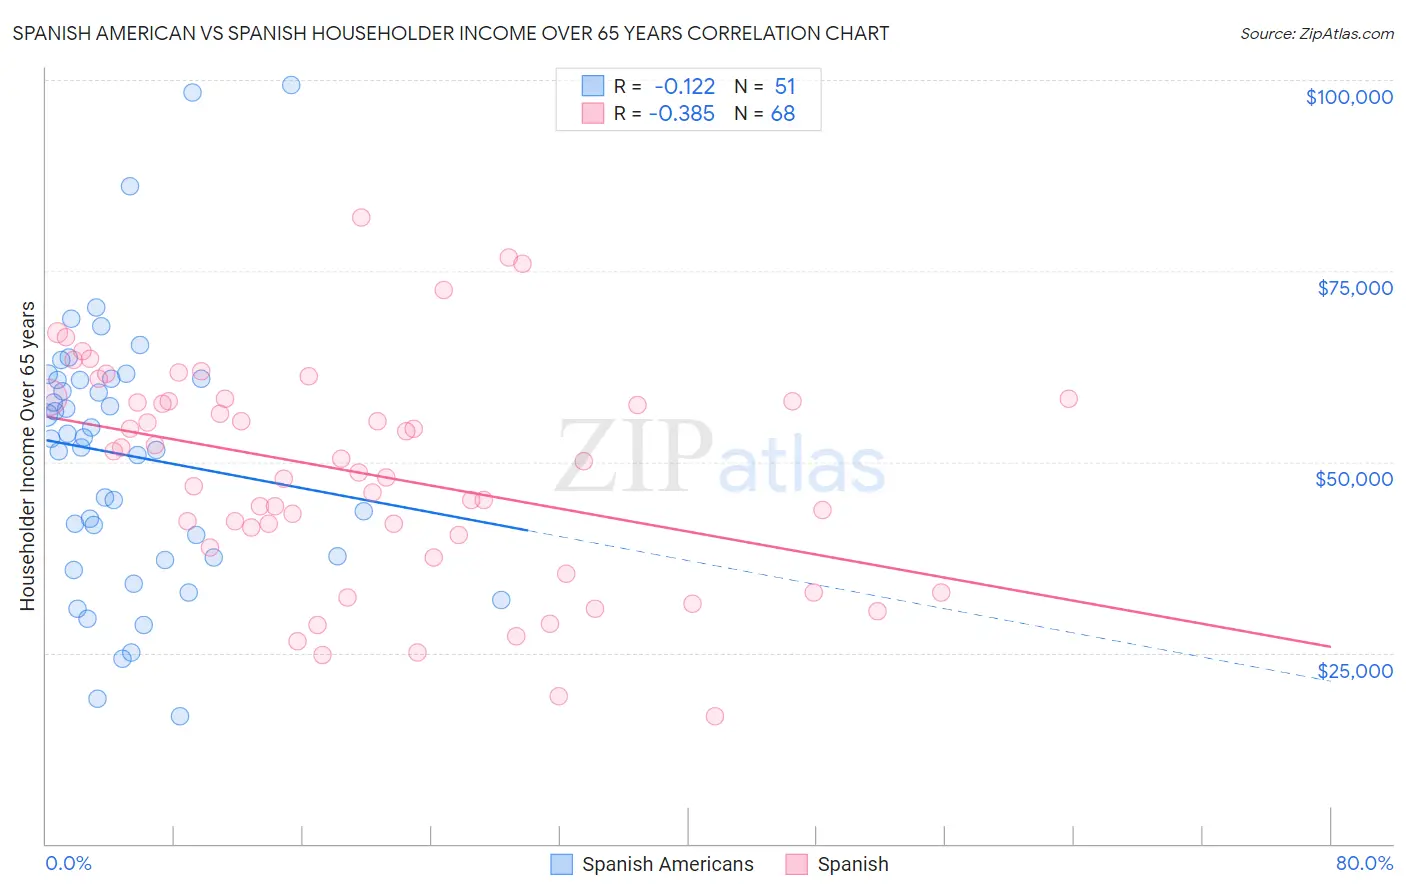 Spanish American vs Spanish Householder Income Over 65 years